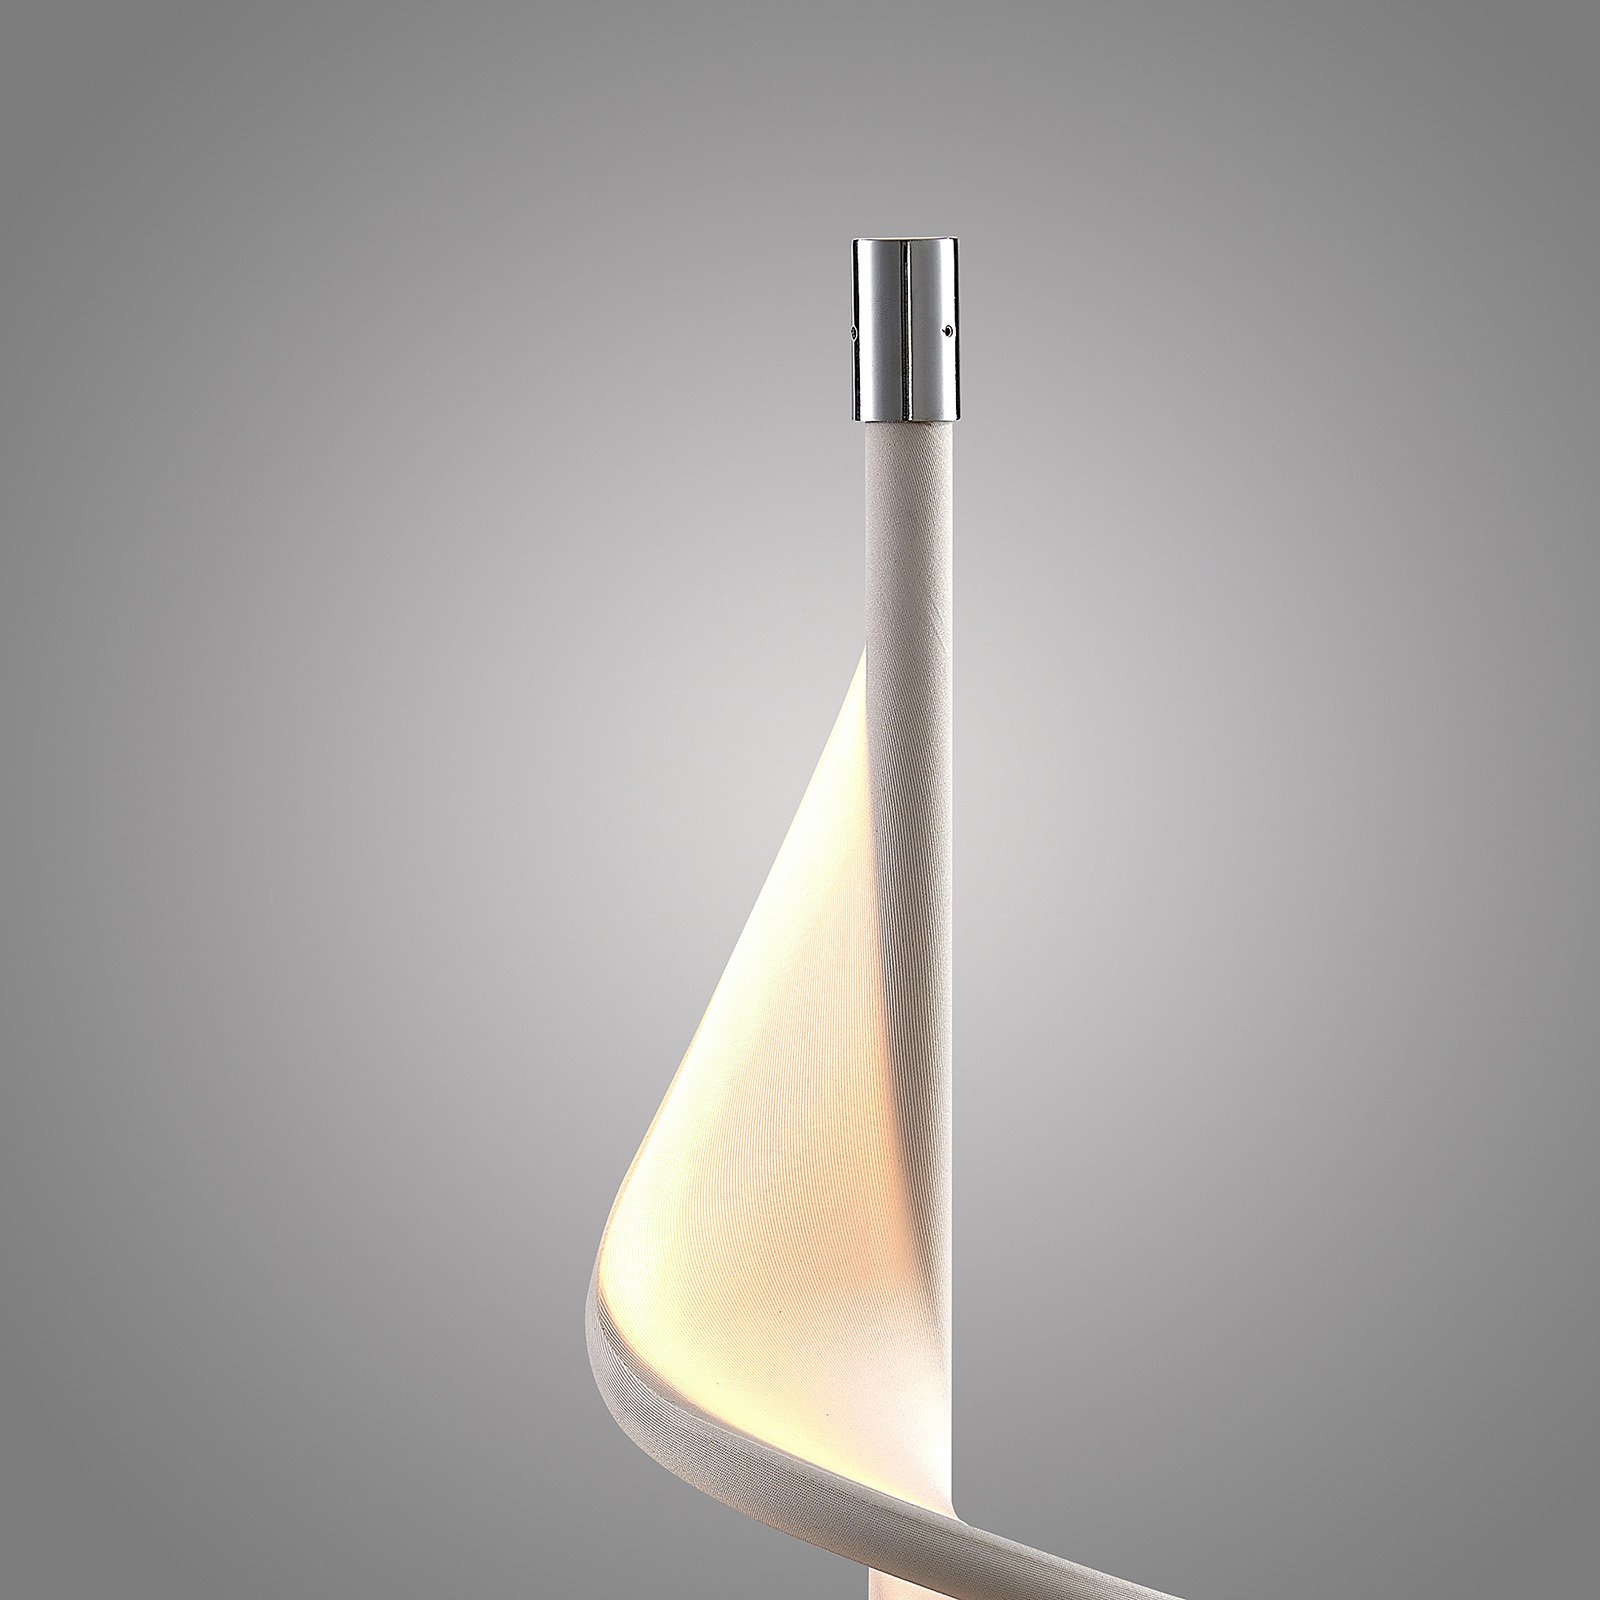 Lucande Edano LED-bordlampe i drejet form